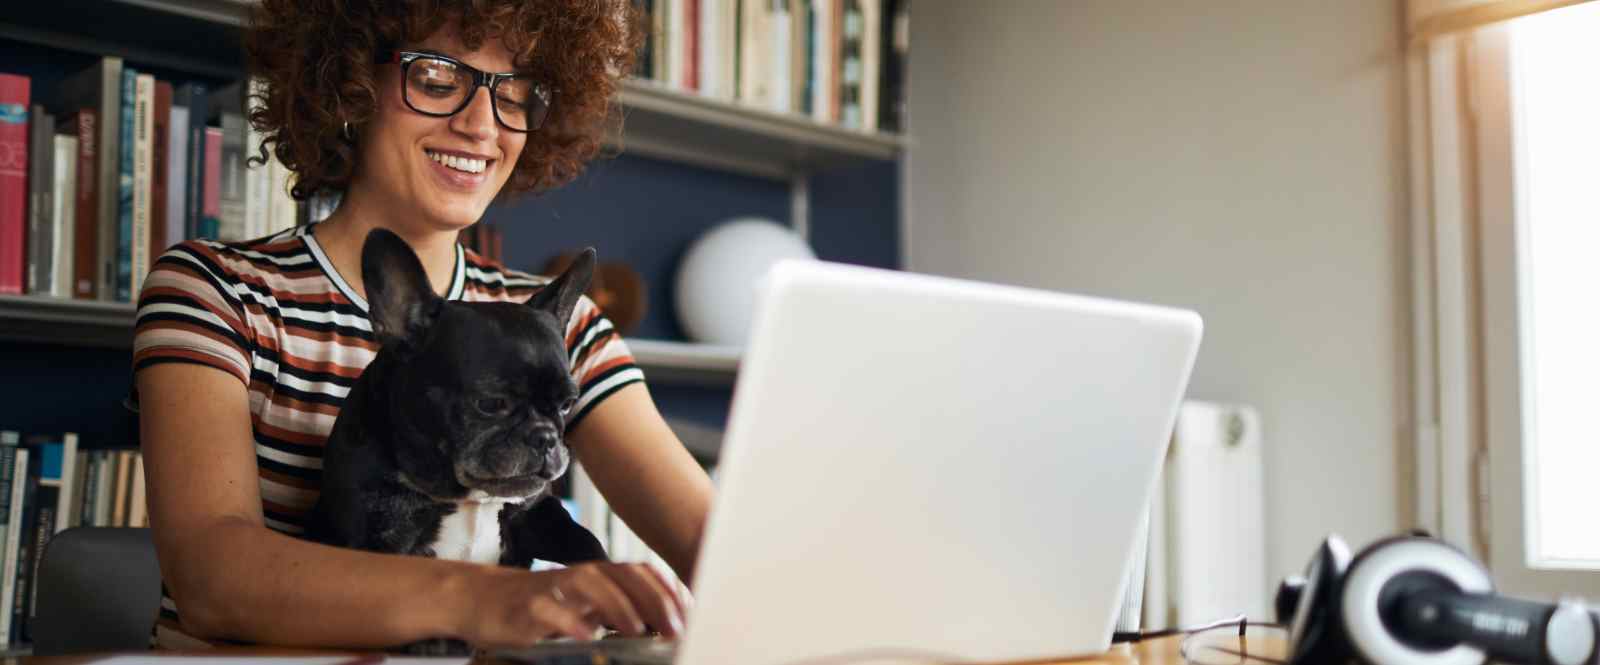 woman holding dog on laptop